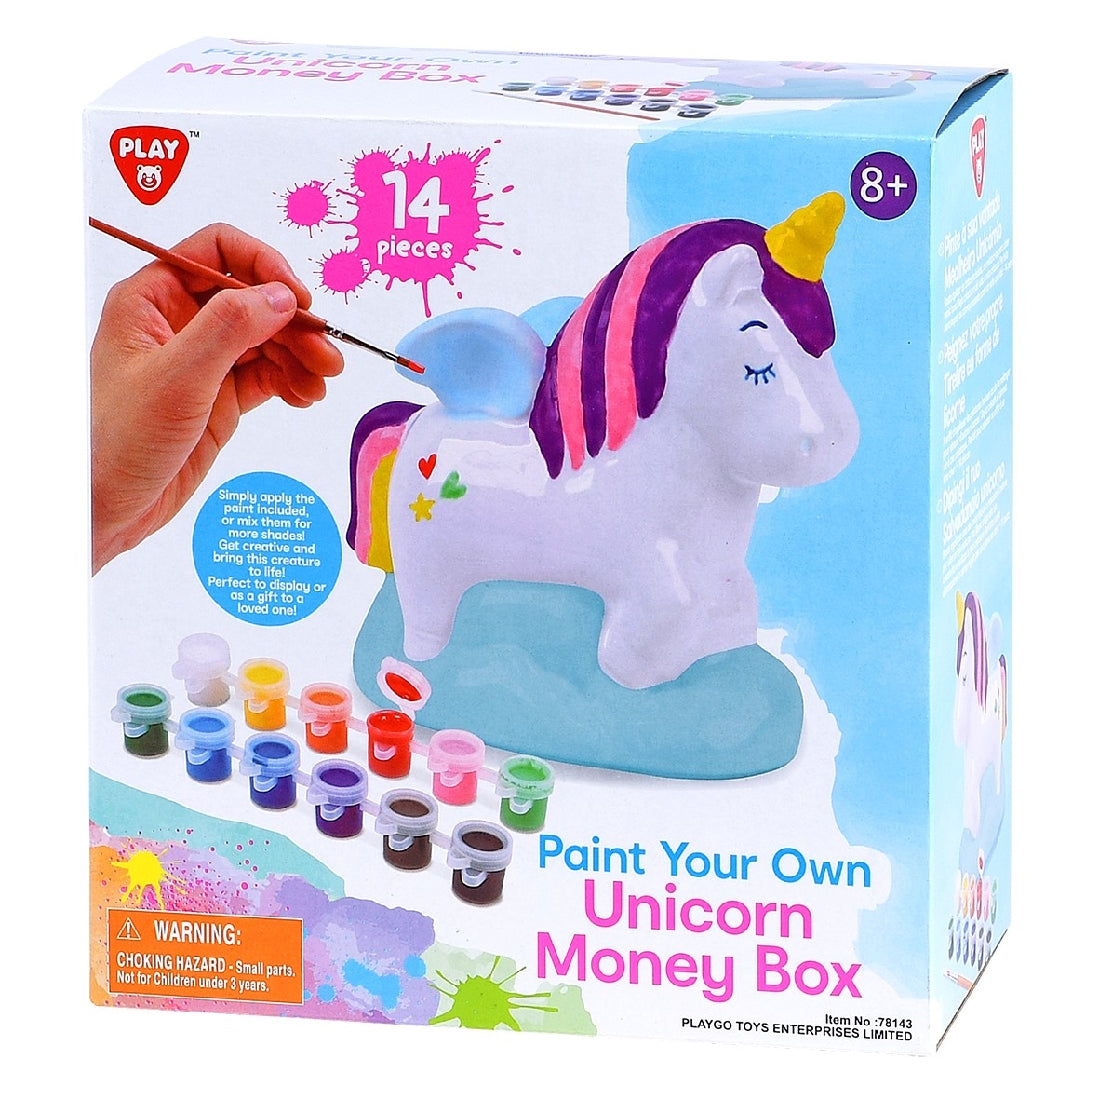 Playgo PYO Unicorn Money Box